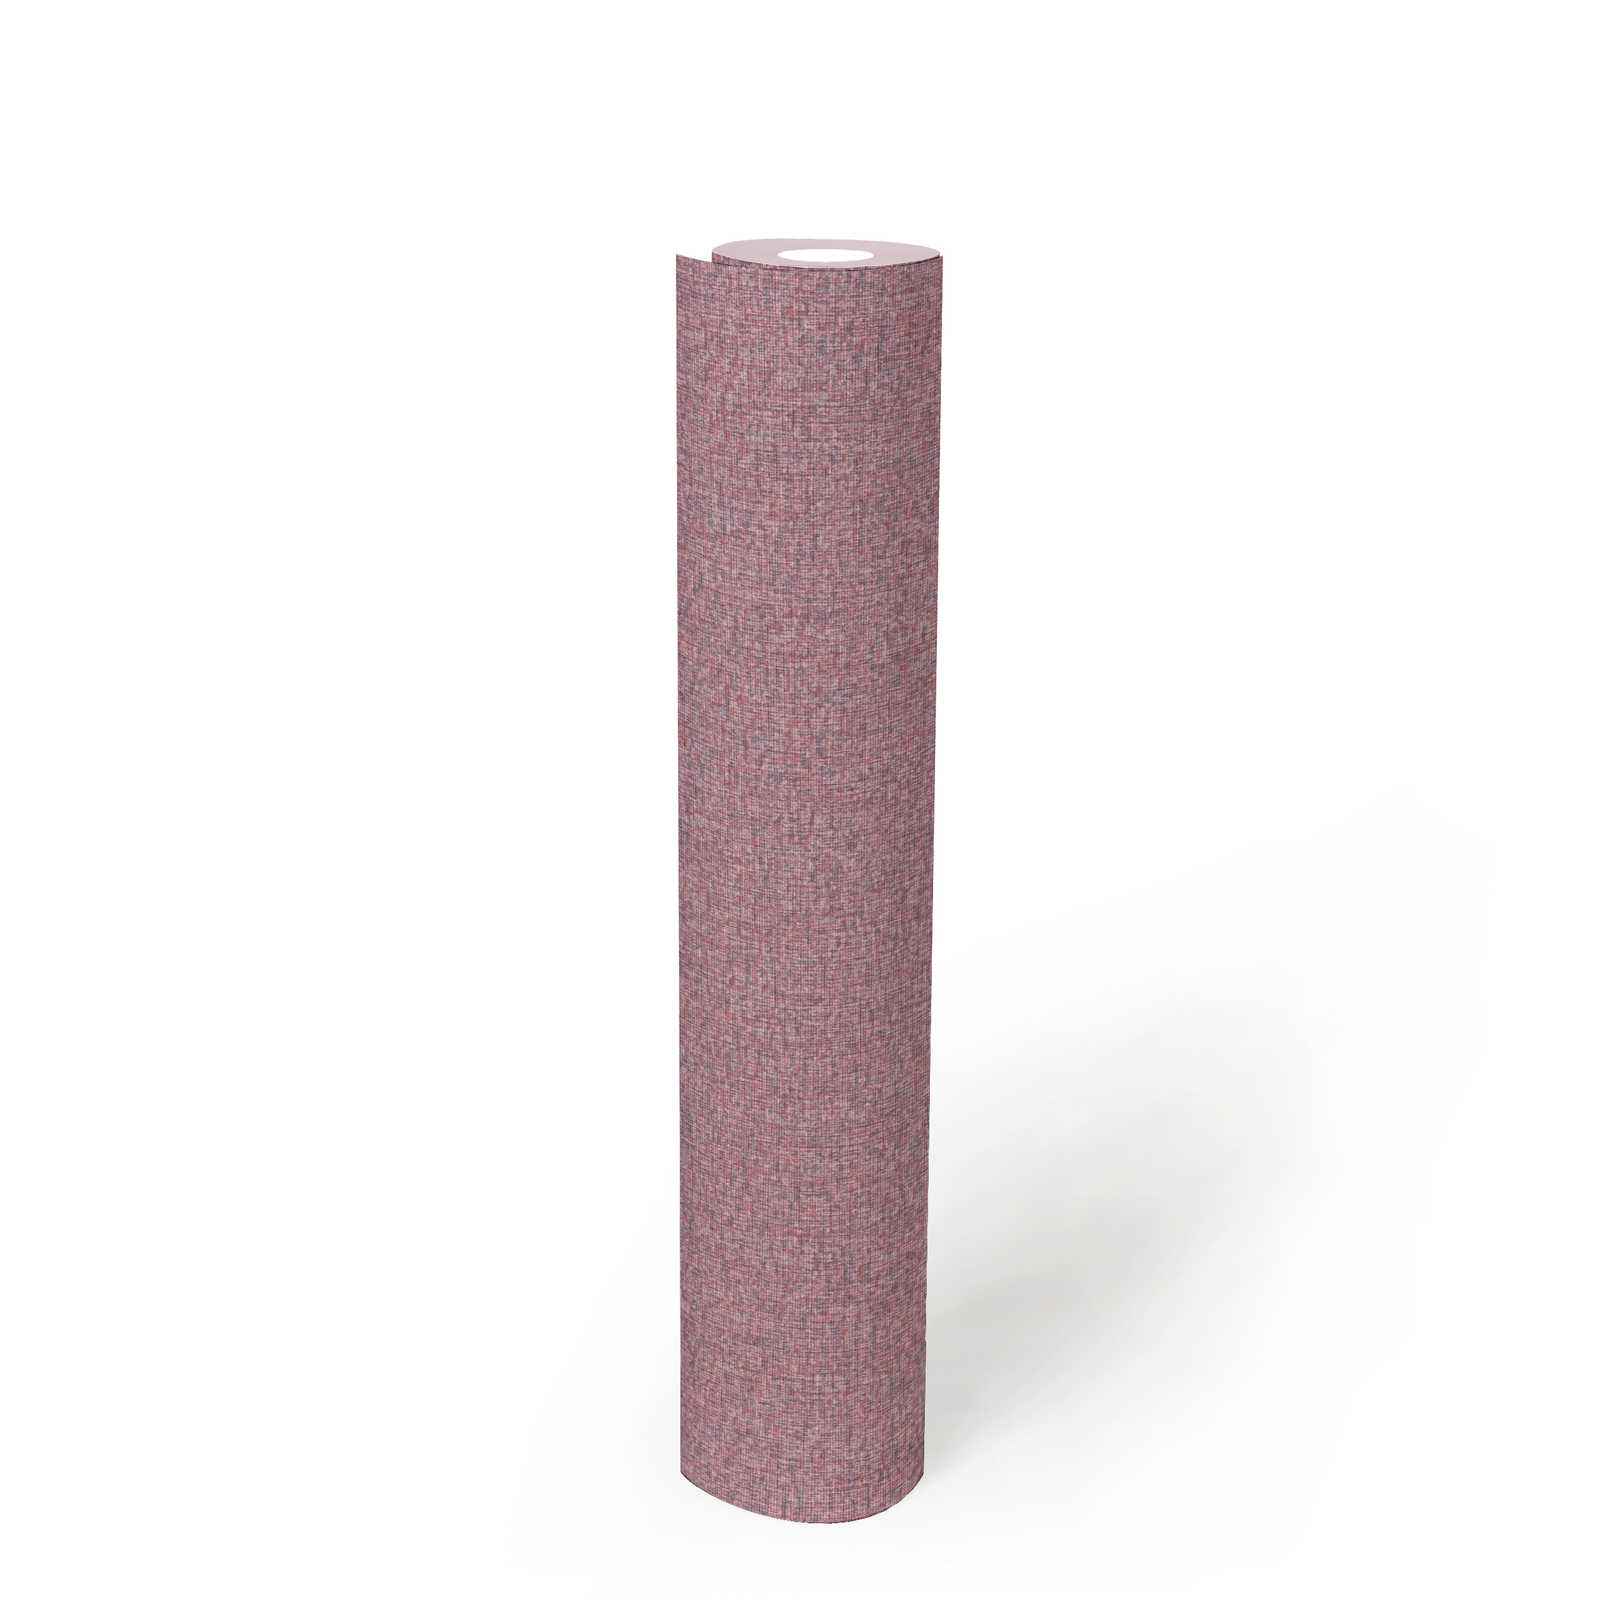             Carta da parati non tessuta con struttura a tinta unita, opaca - viola, rosa
        